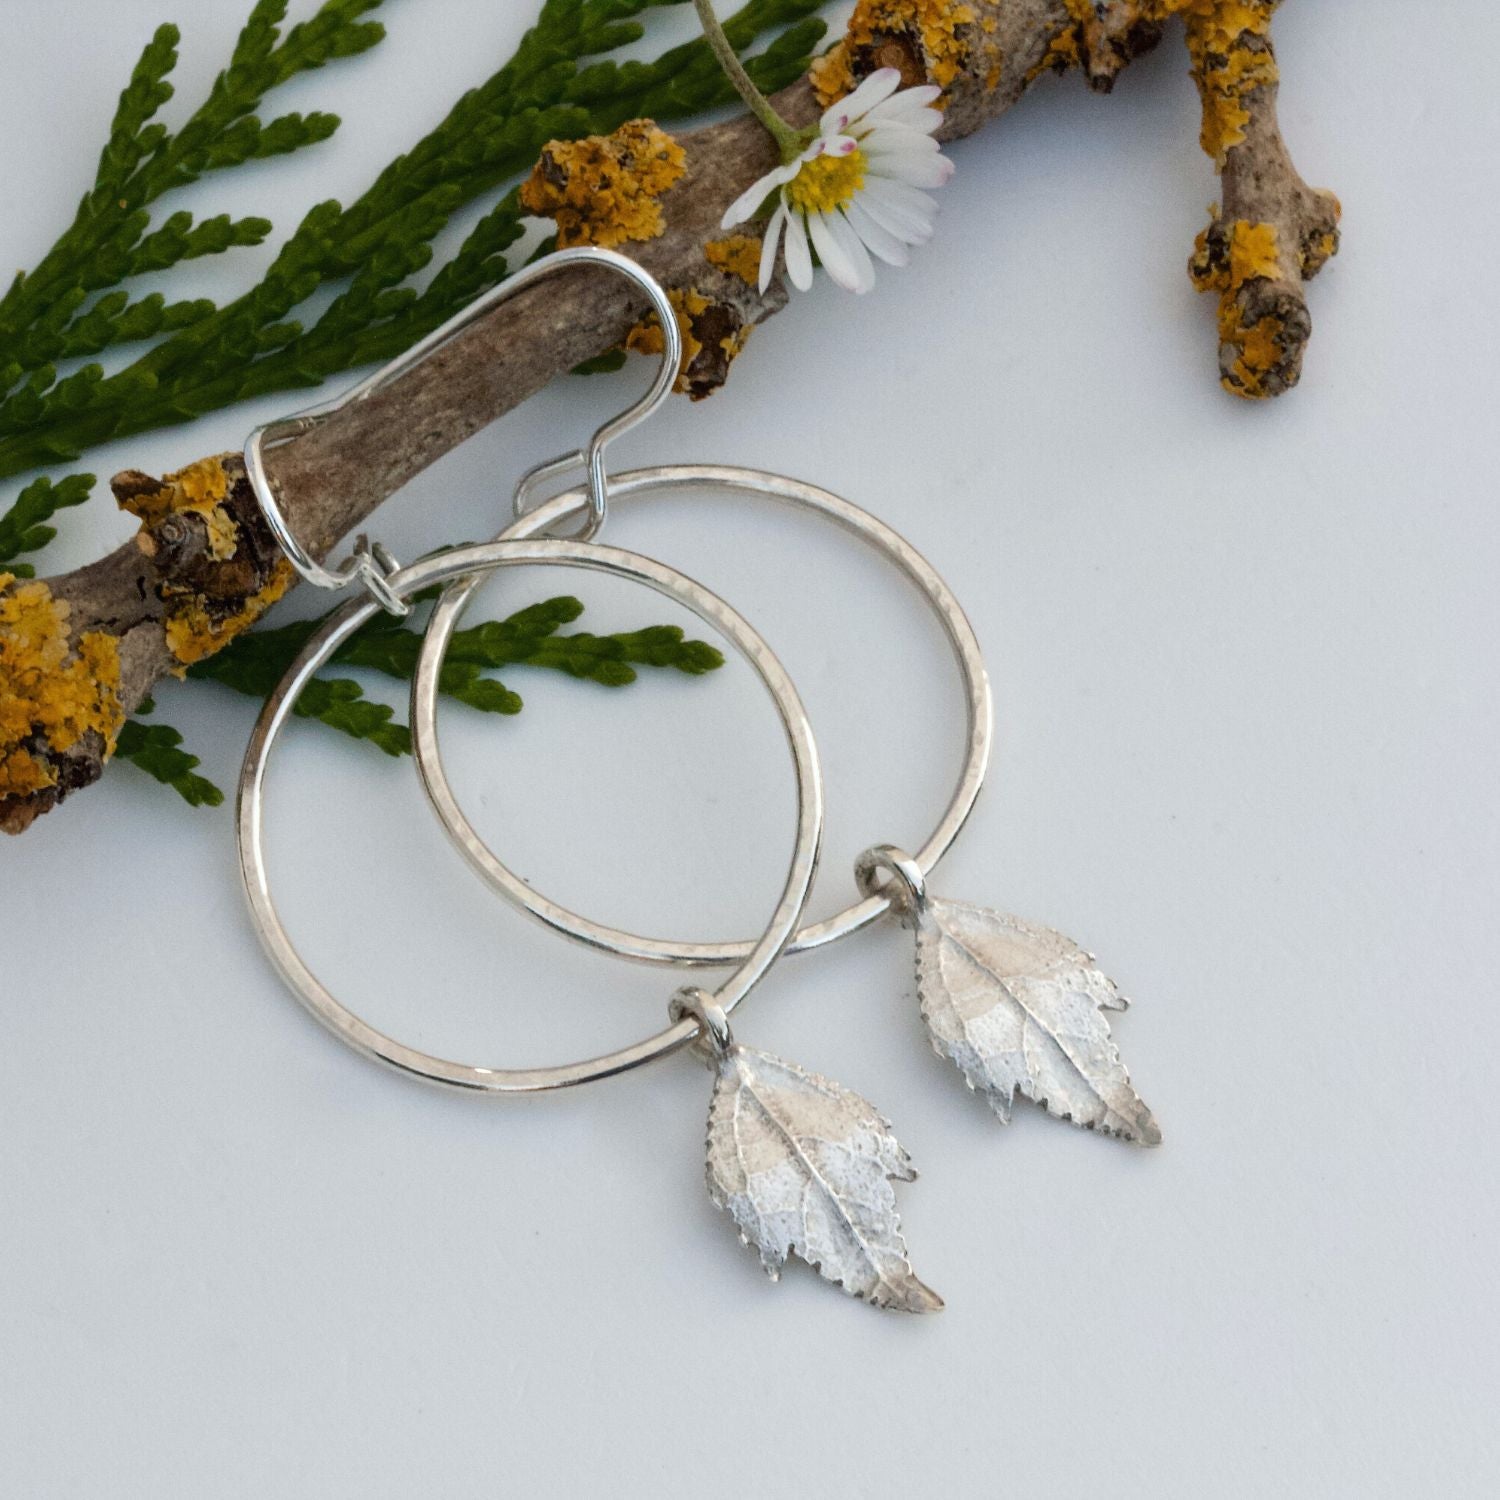 Boho Silver Hoop Earrings with a drop leaf dangle